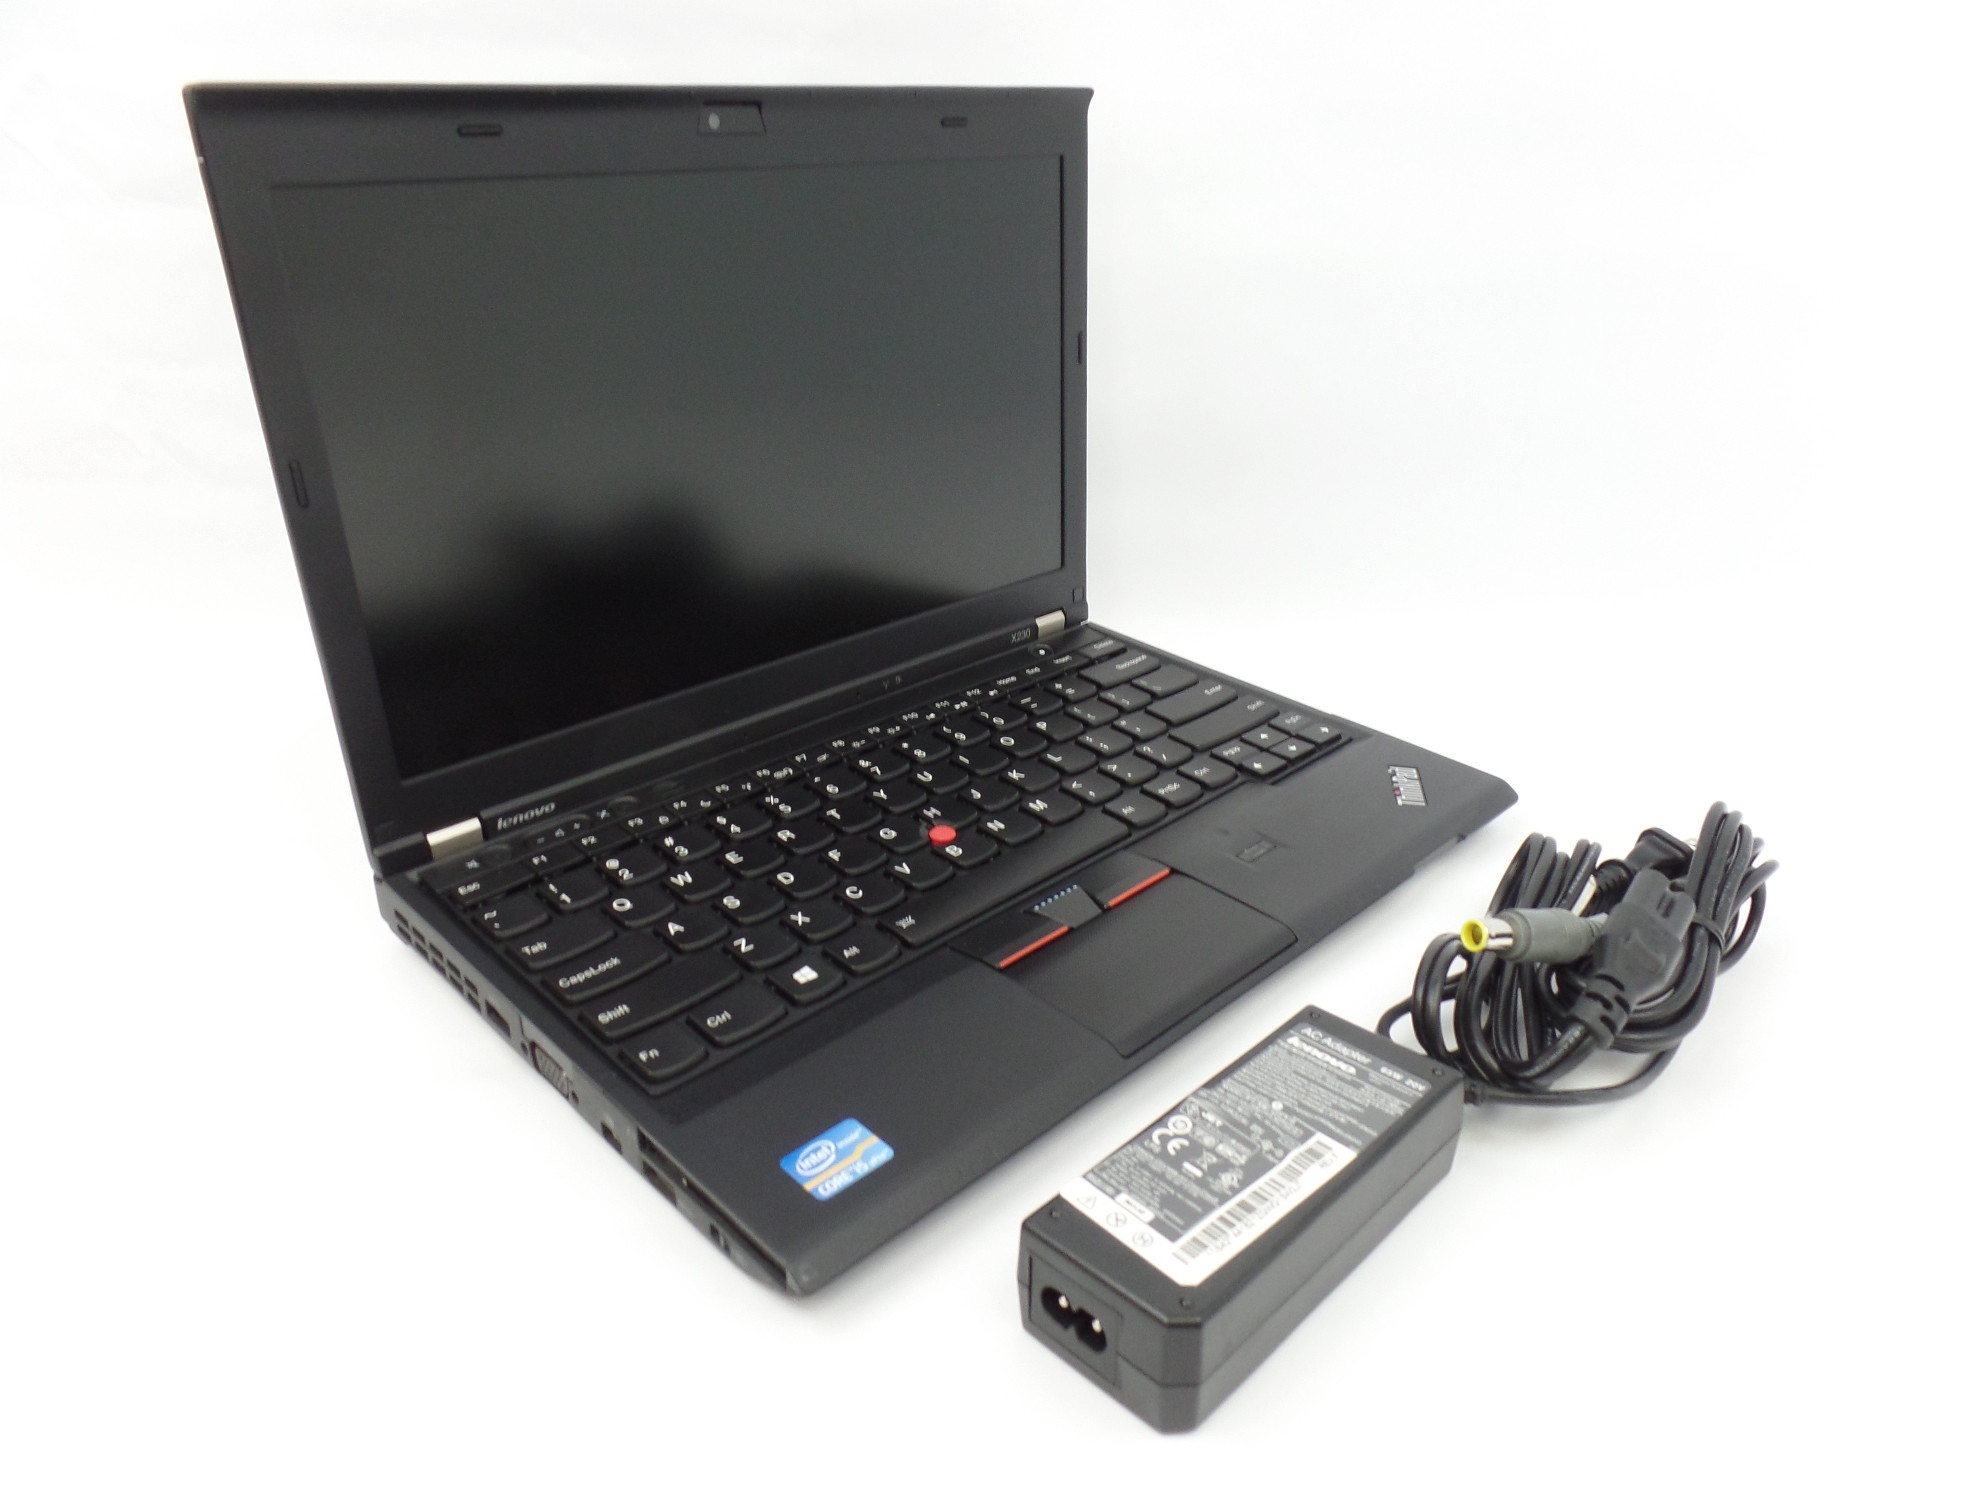 Lenovo ThinkPad x230 12.5" HD i5-3320M 2.6GHz 8GB 500GB HDD W10P Laptop 2320HPU 